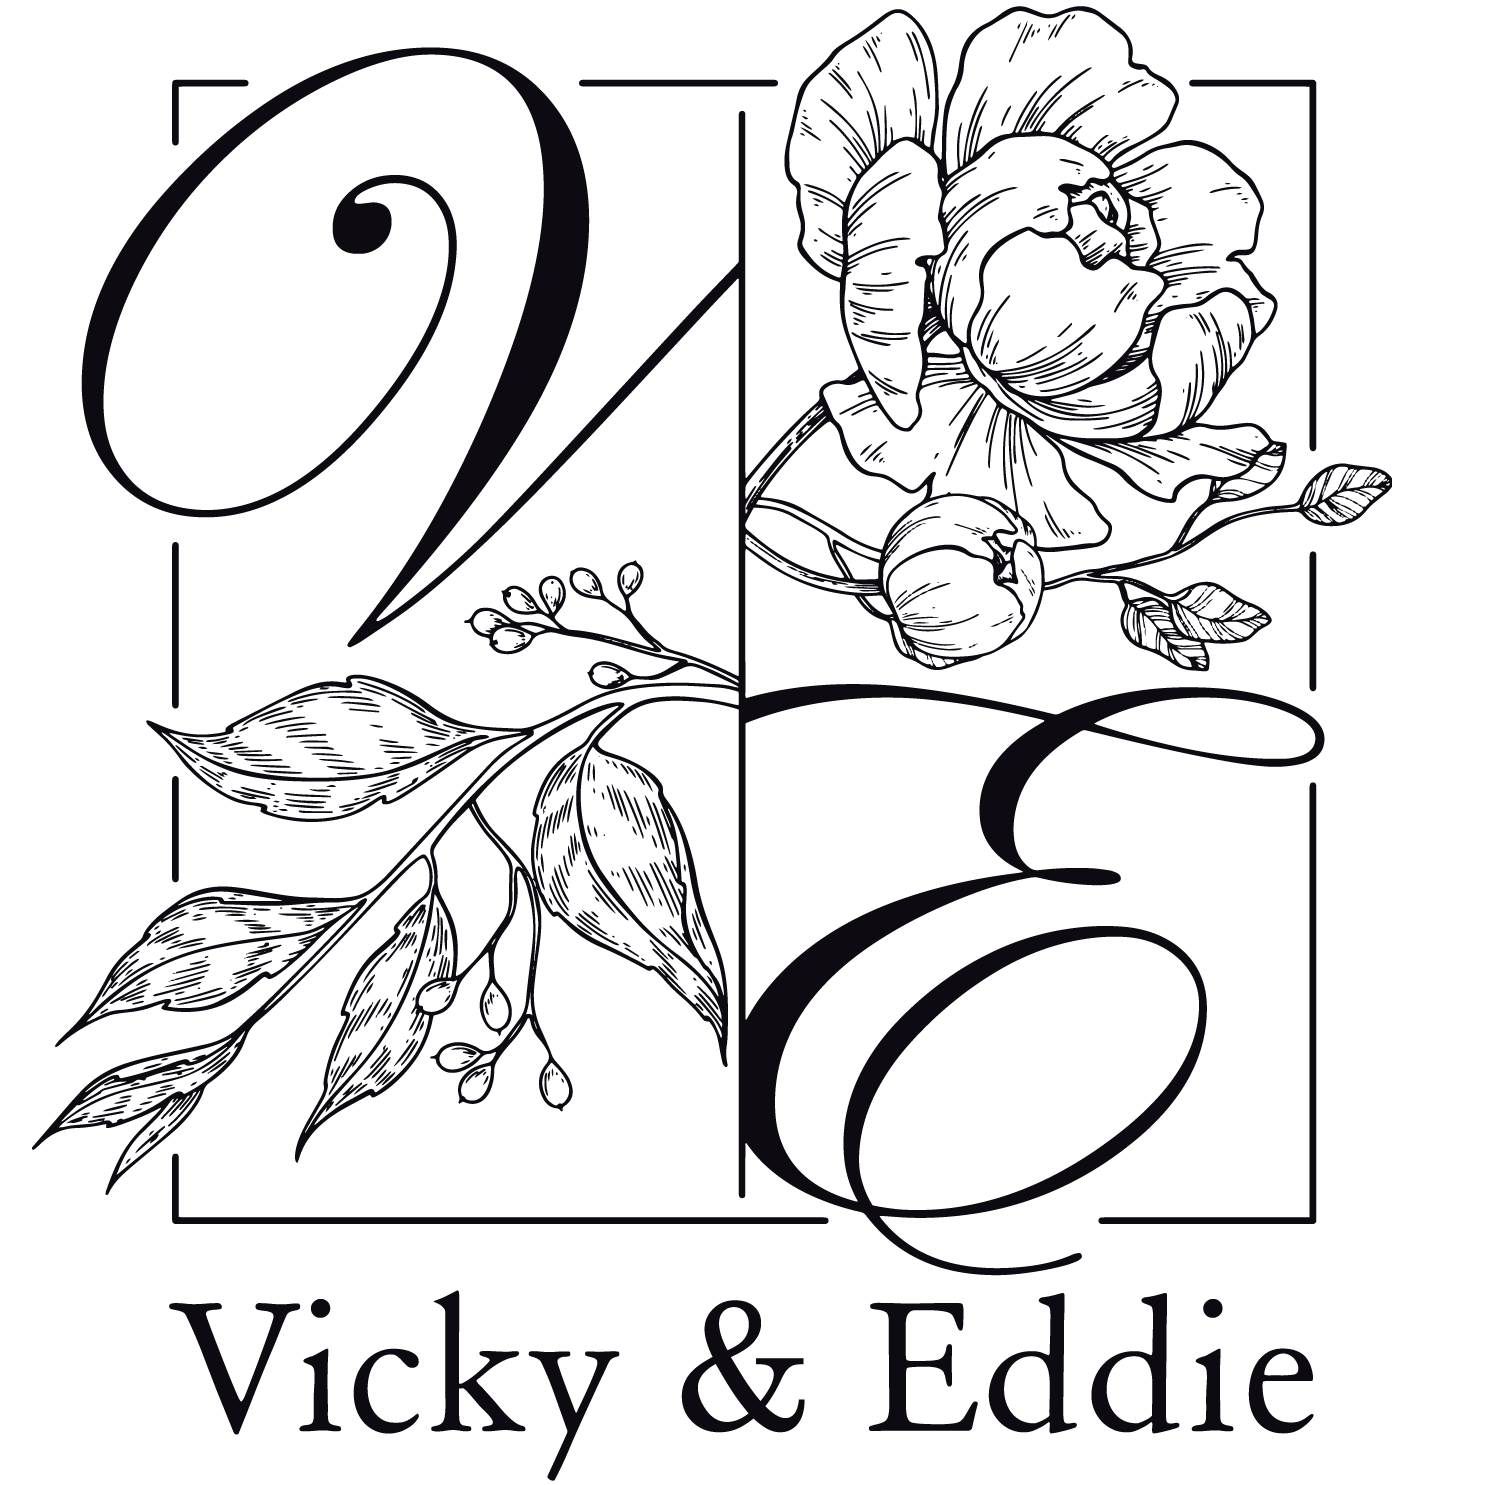 Vicky and Eddie